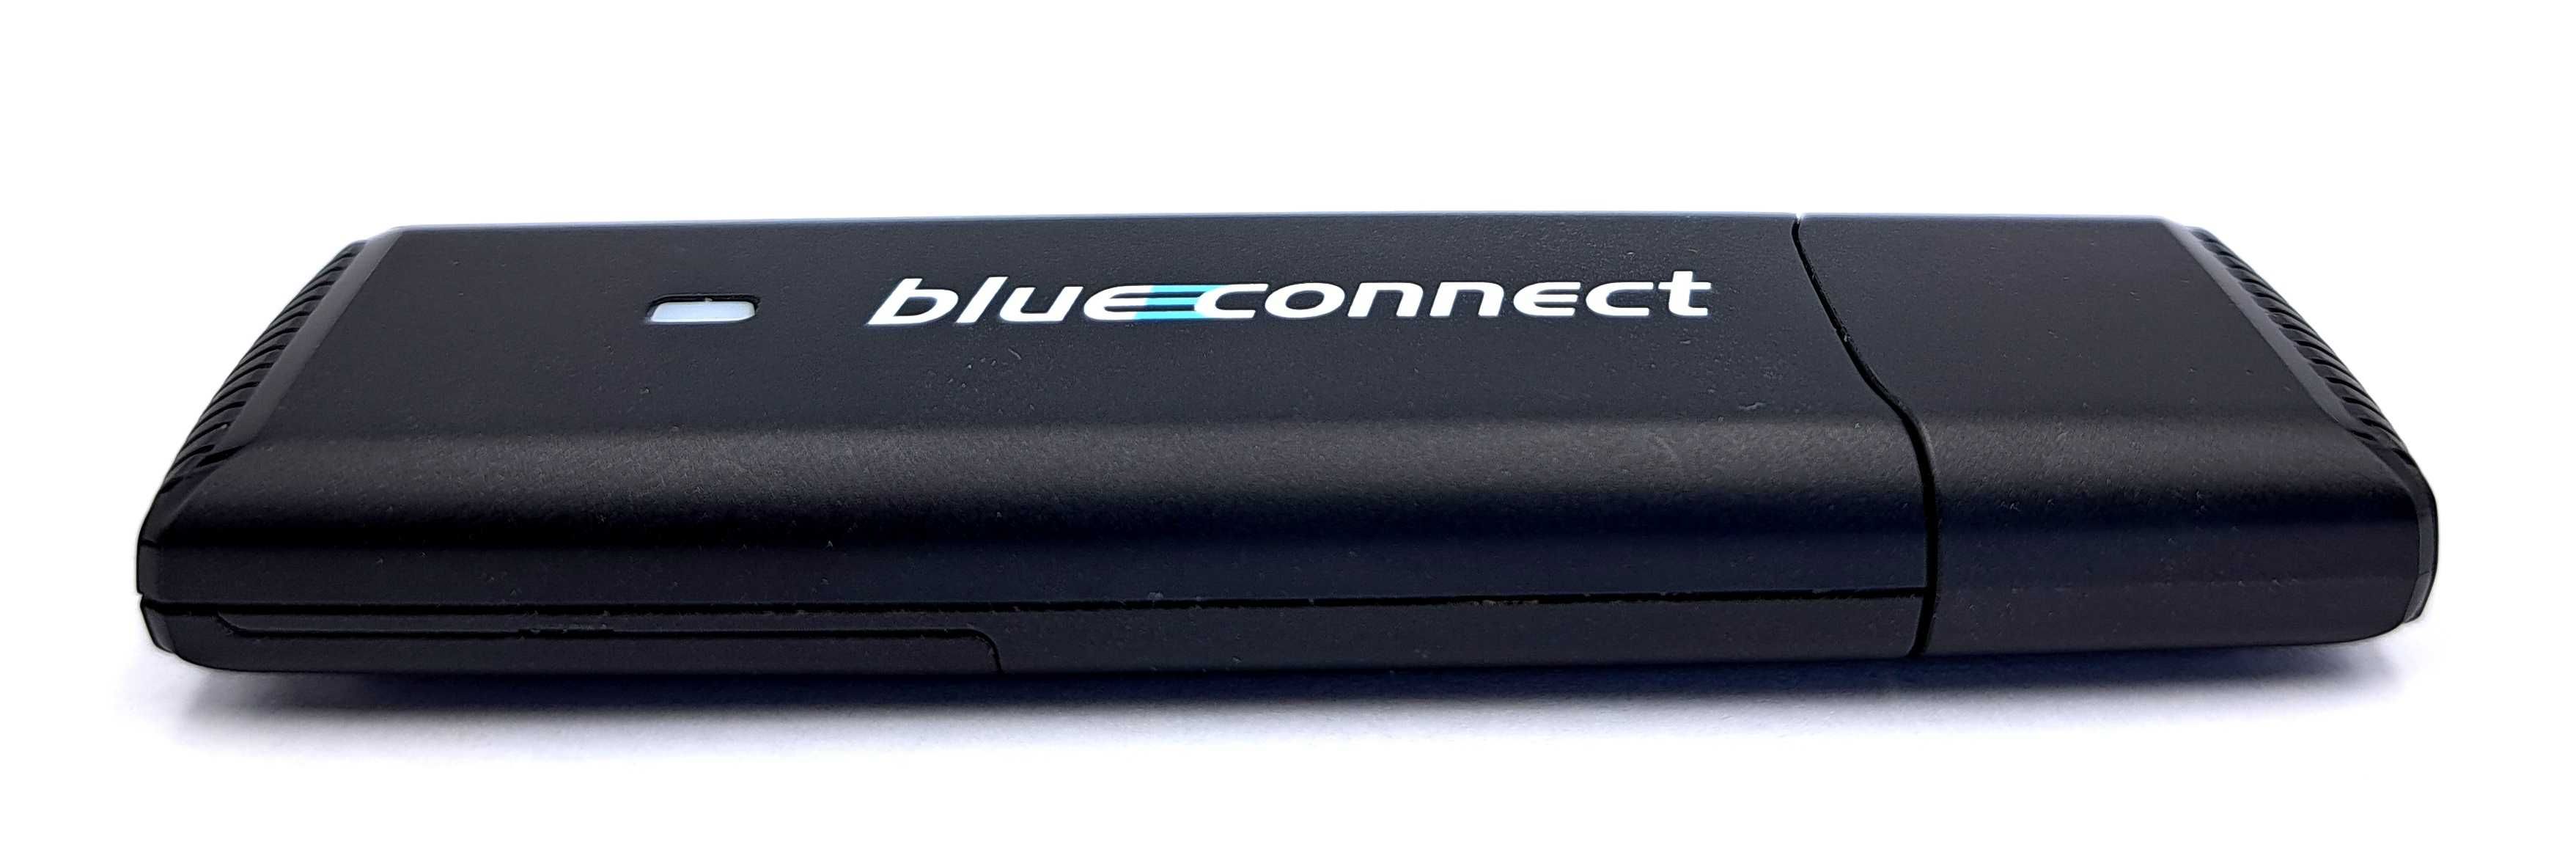 Modem USB 3G/3G+ Huawei E1750C